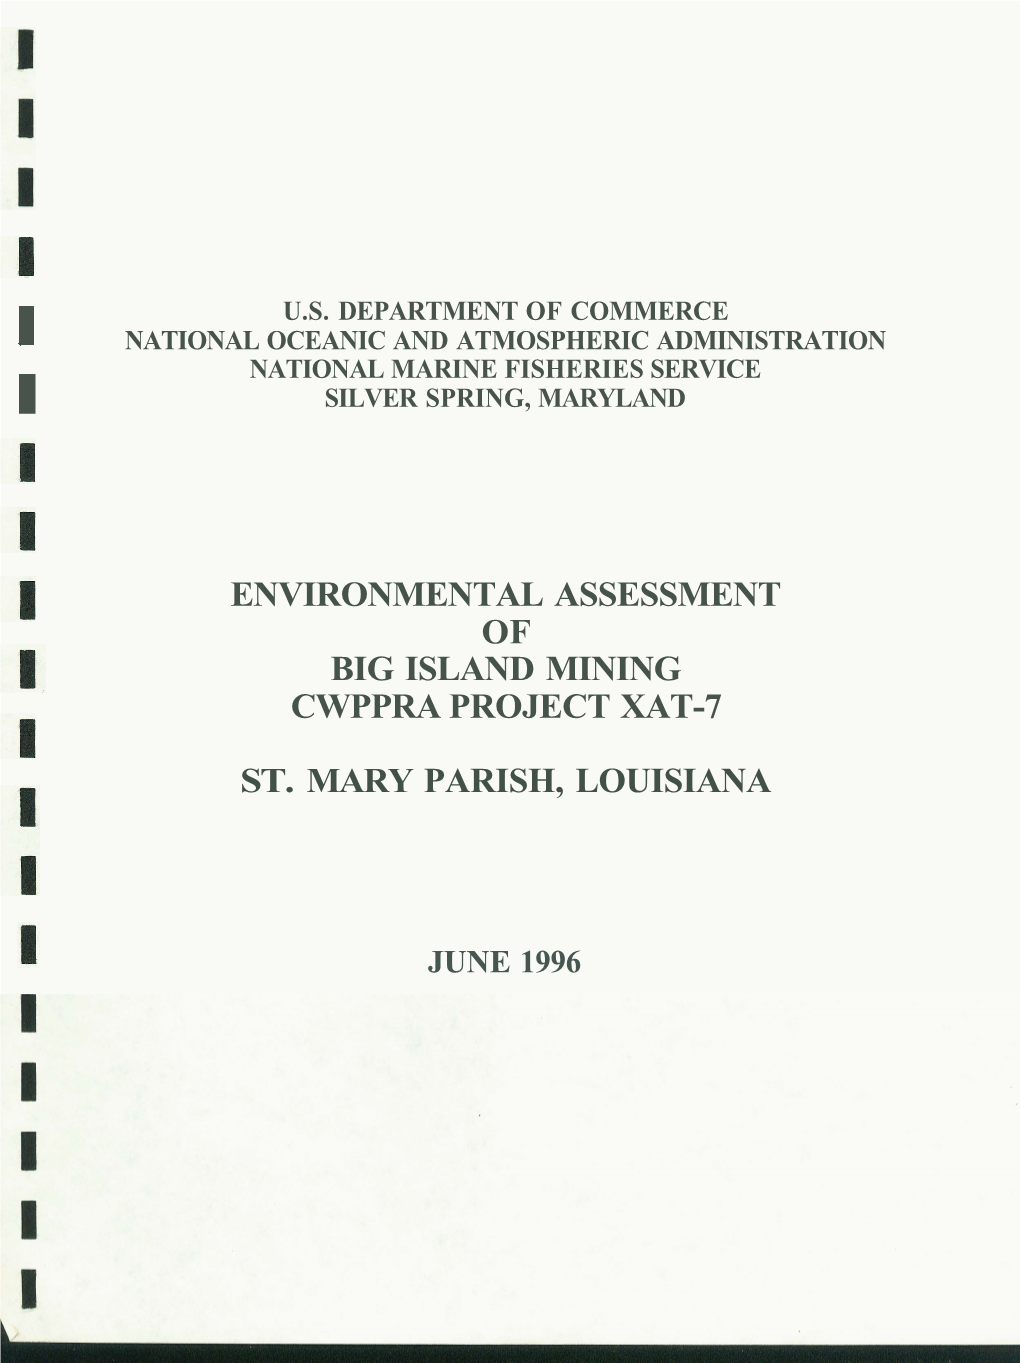 Environmental Assessment of Big Island Mining Cwppra Project Xat-7